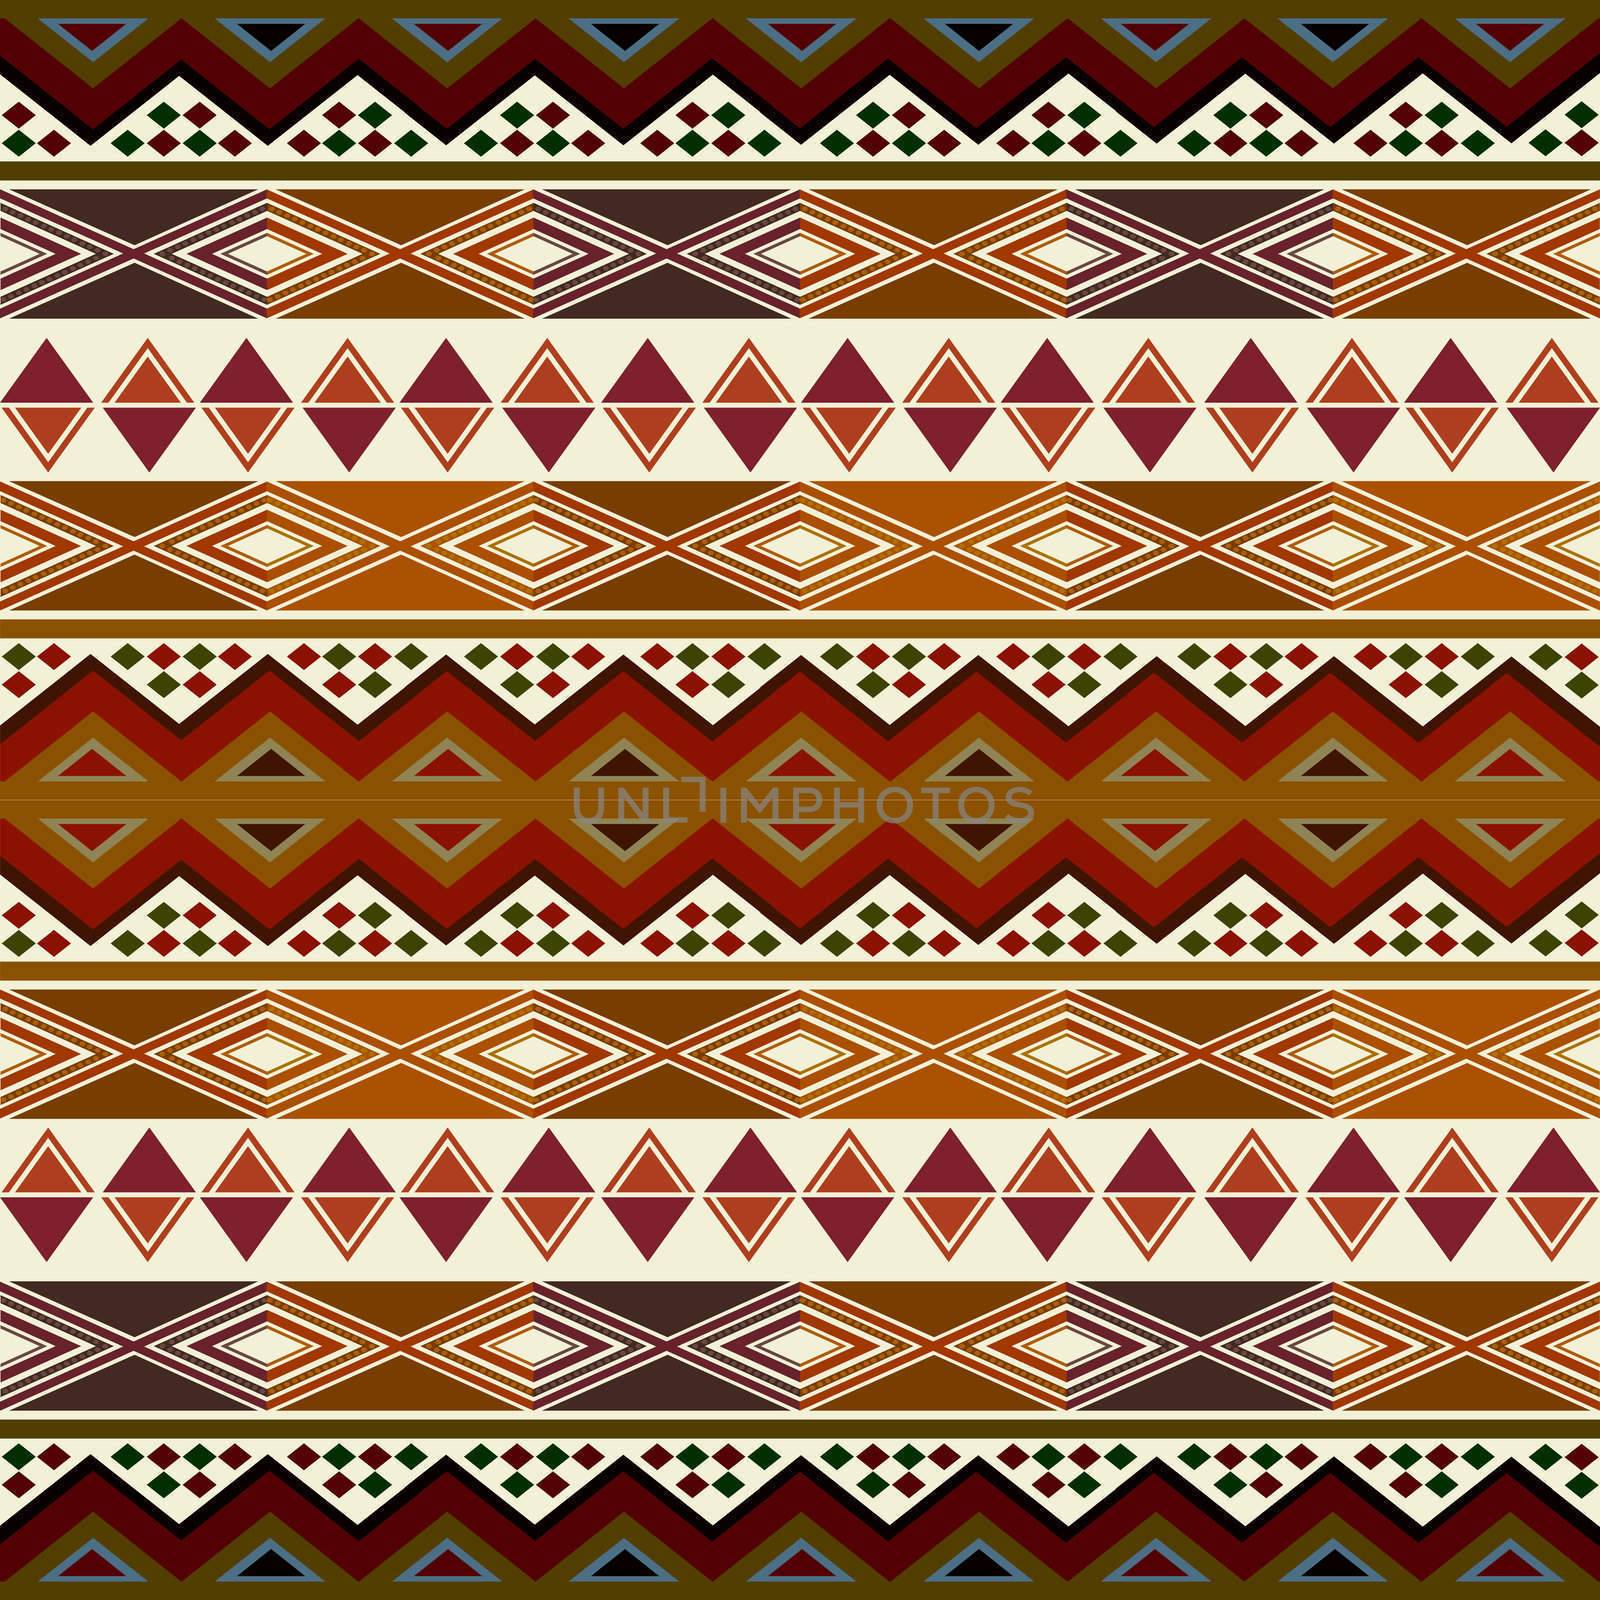 African pattern by Lirch